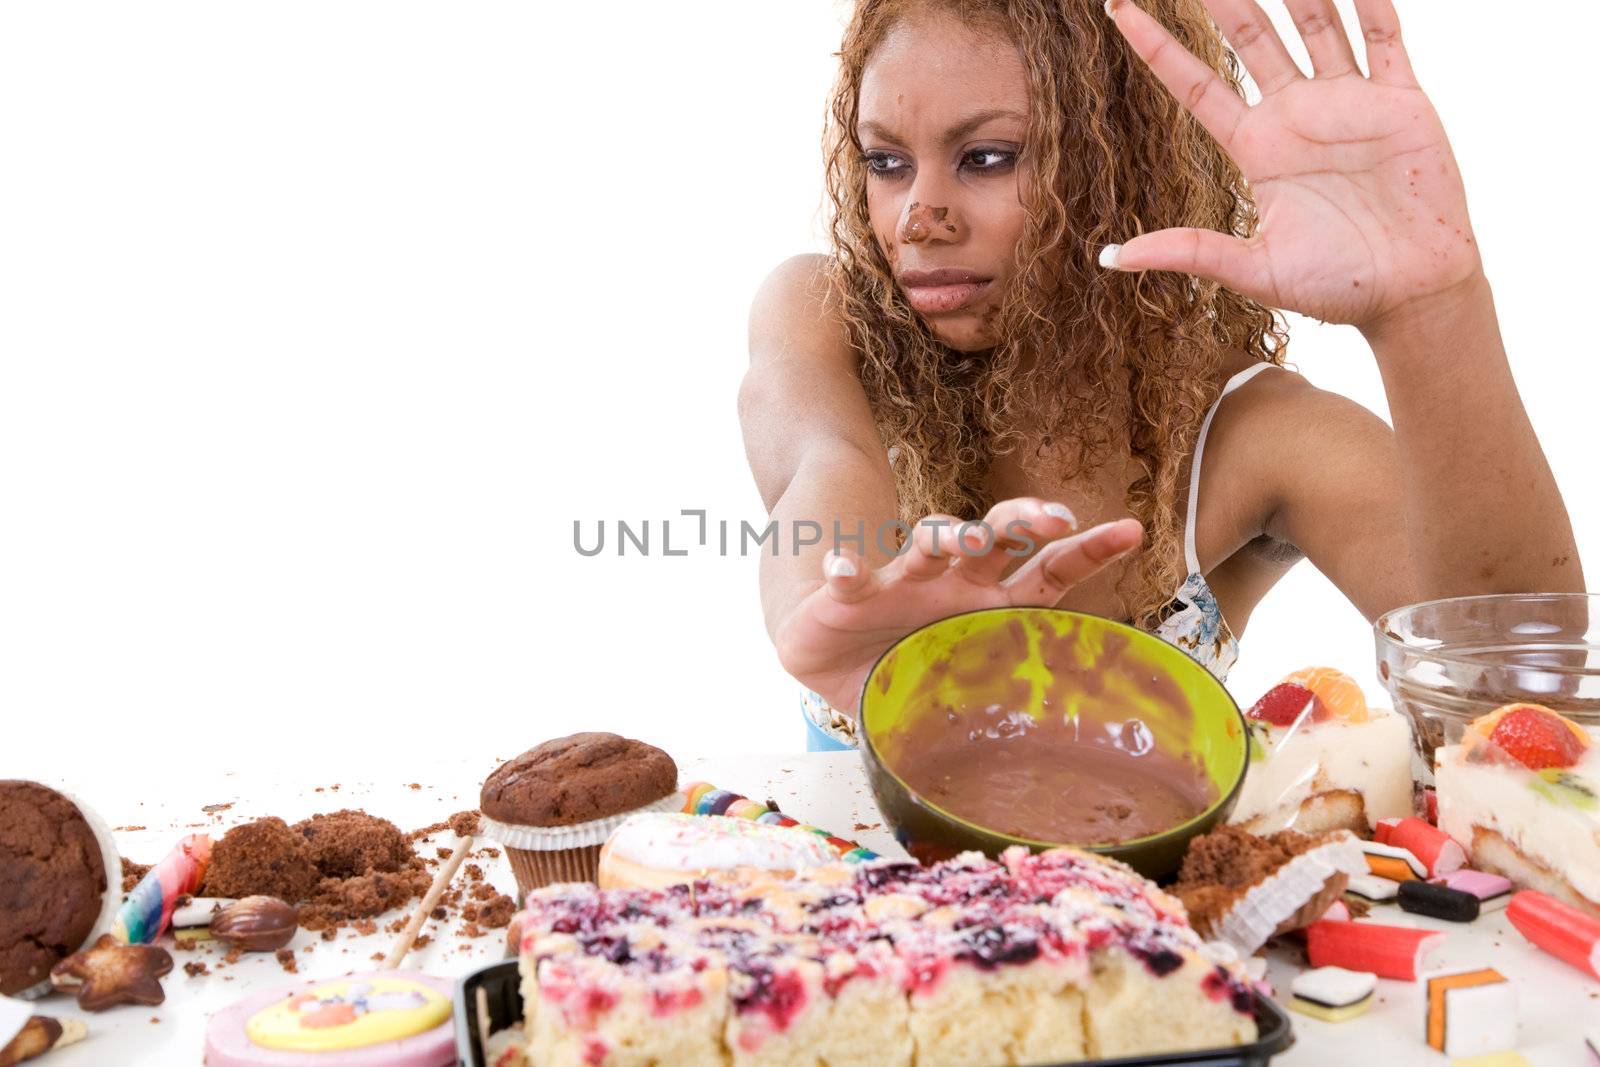 Pretty black girl pushing away the food she has just eaten